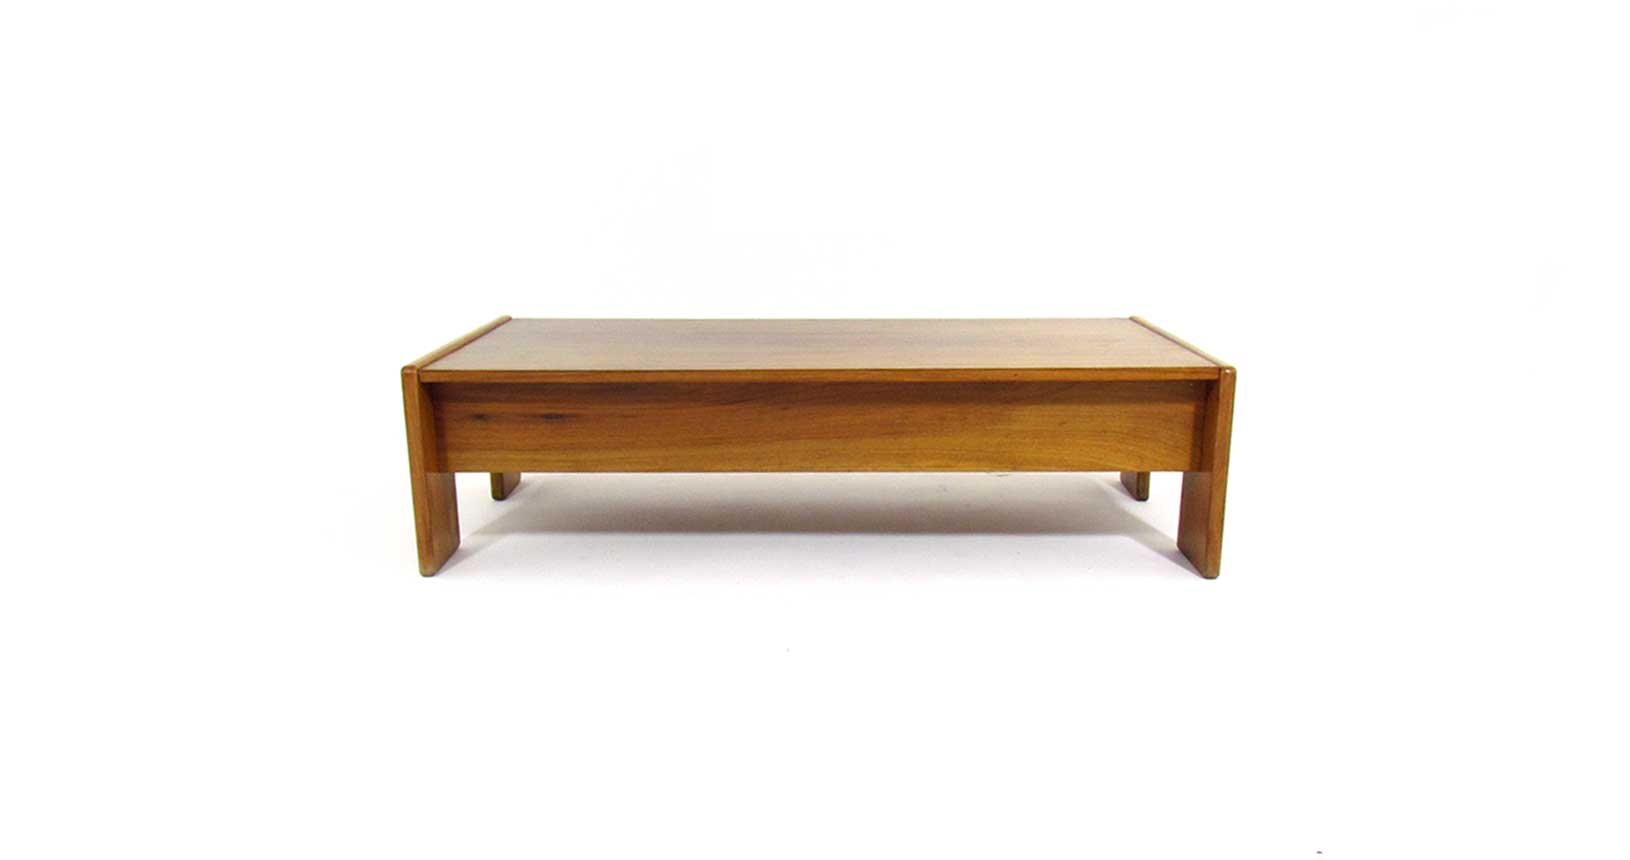 Bastiano table gavina design tobia scarpa knoll afra wood design vintage iconicdesign iconic design